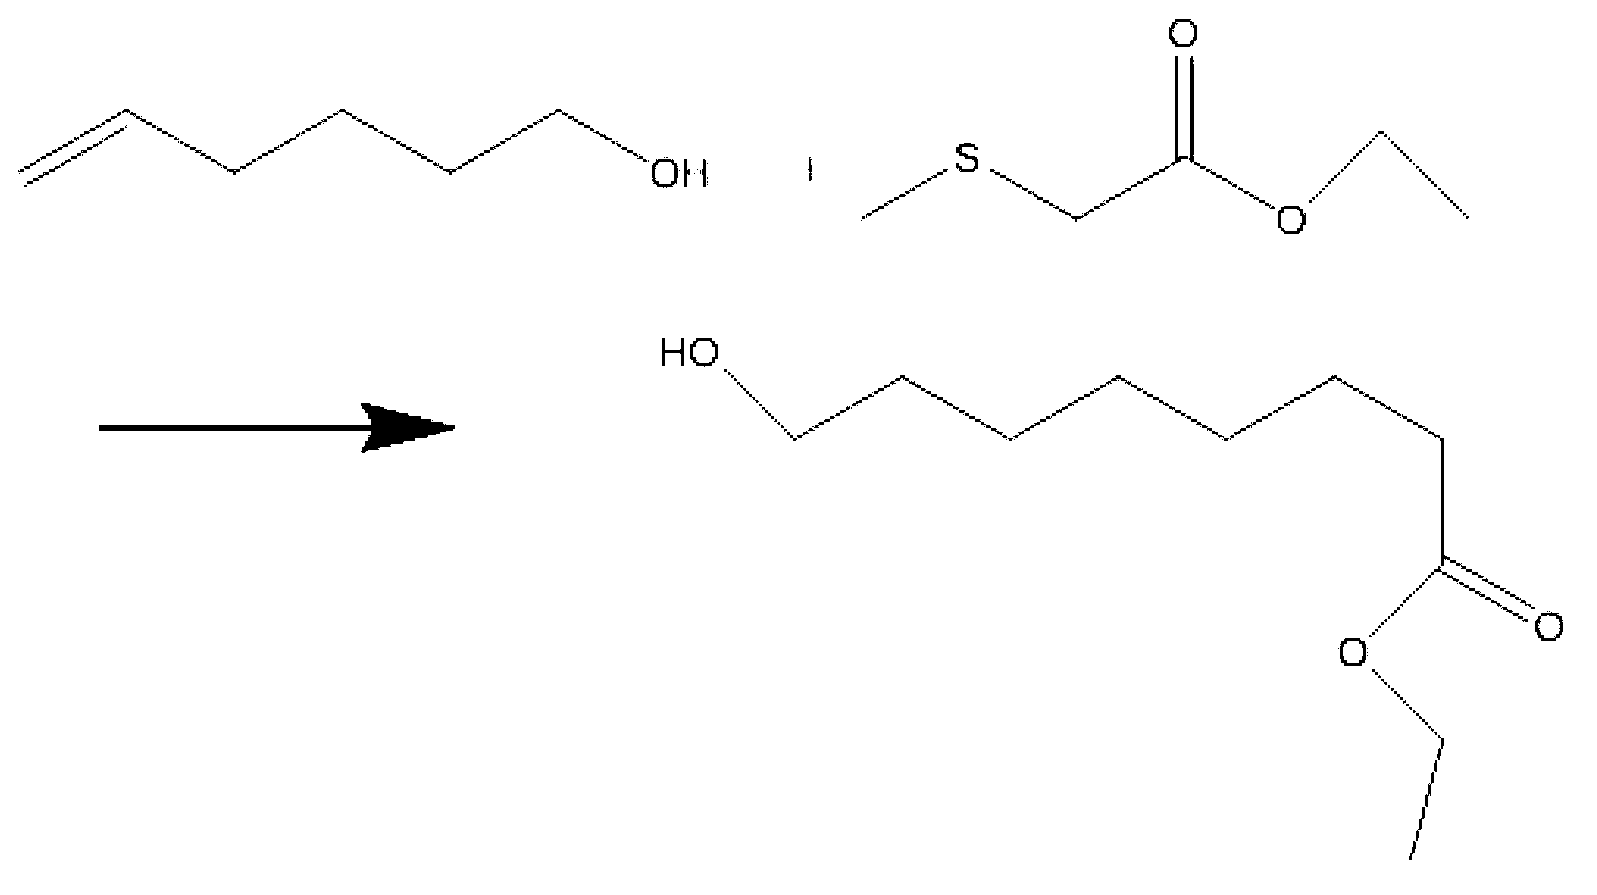 Synthesis method of 8-hydroxyl ethyl caprylate